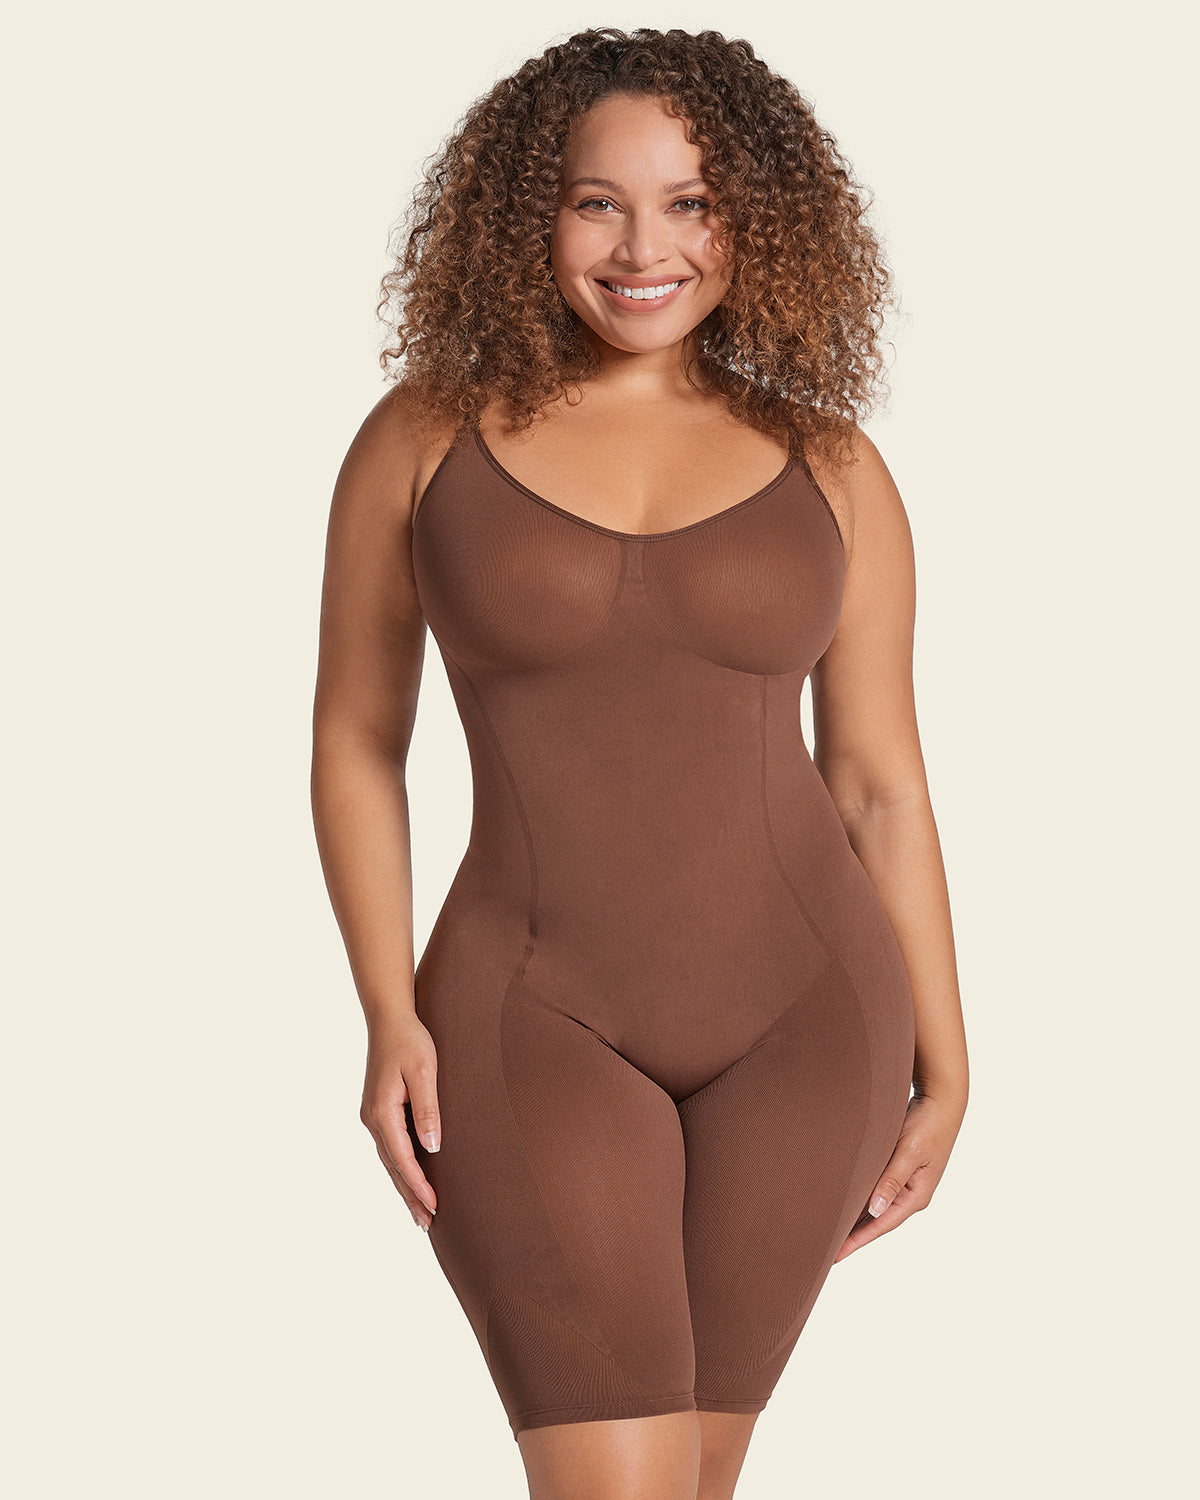 SHOPBOP Full Body Shaper For Women - Imported 100% Original Slimming  Bodysuit Full Body Shapewear